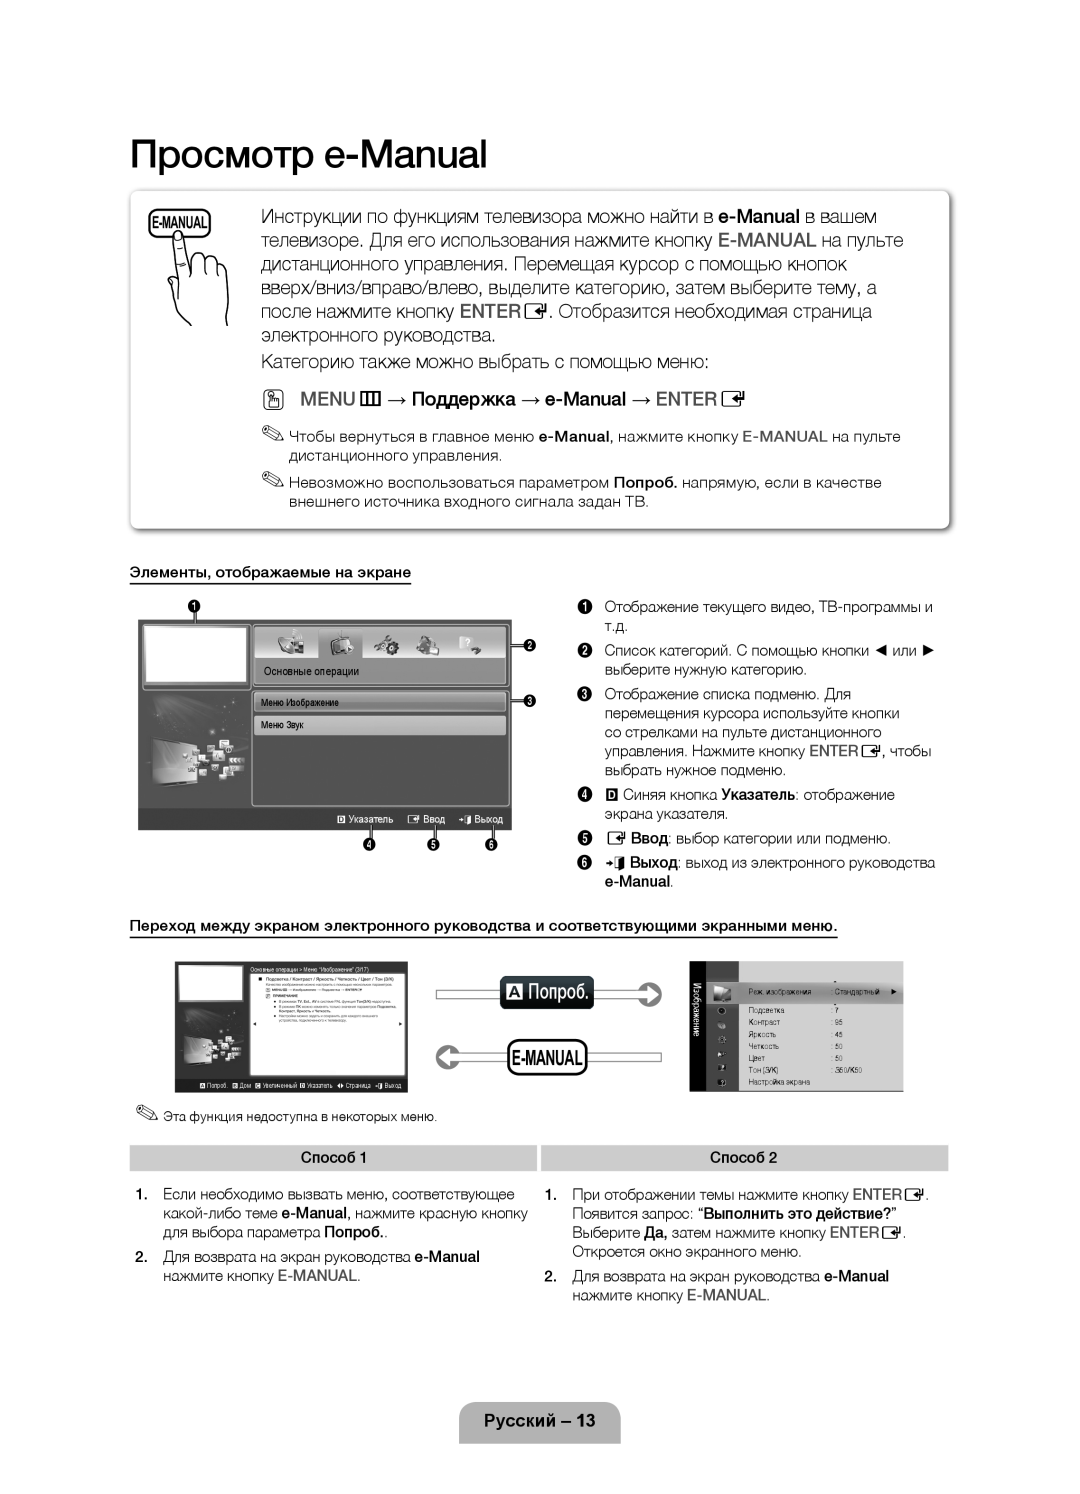 Samsung UE32D5000PWXBT manual Просмотр e-Manual, aПопроб, Инструкции по функциям телевизора можно найти в e-Manual в вашем 